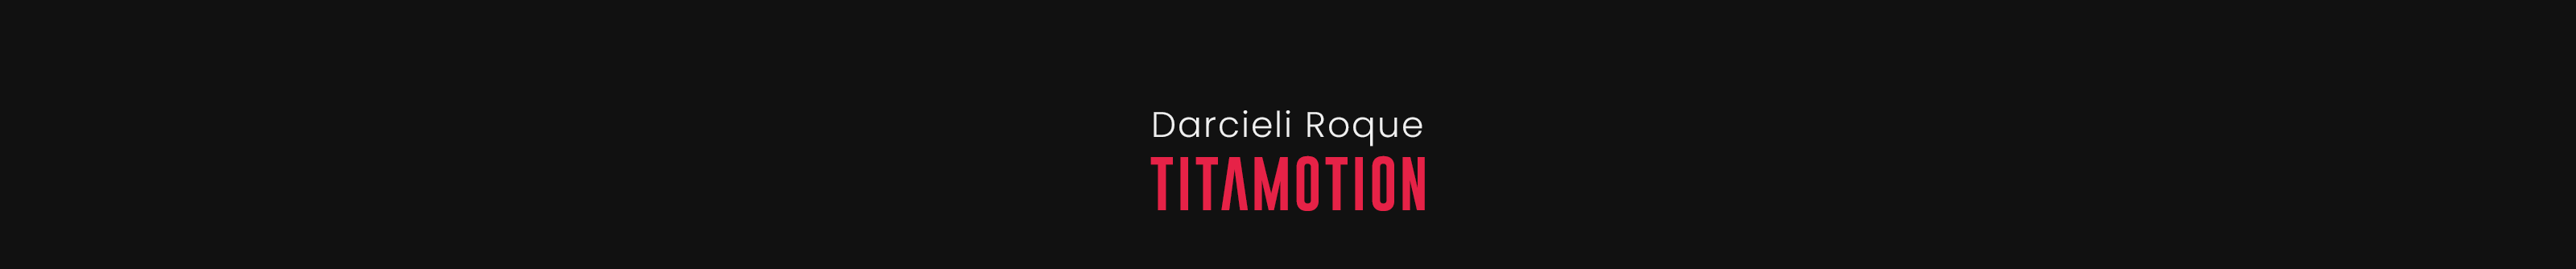 Darcieli Roque's profile banner